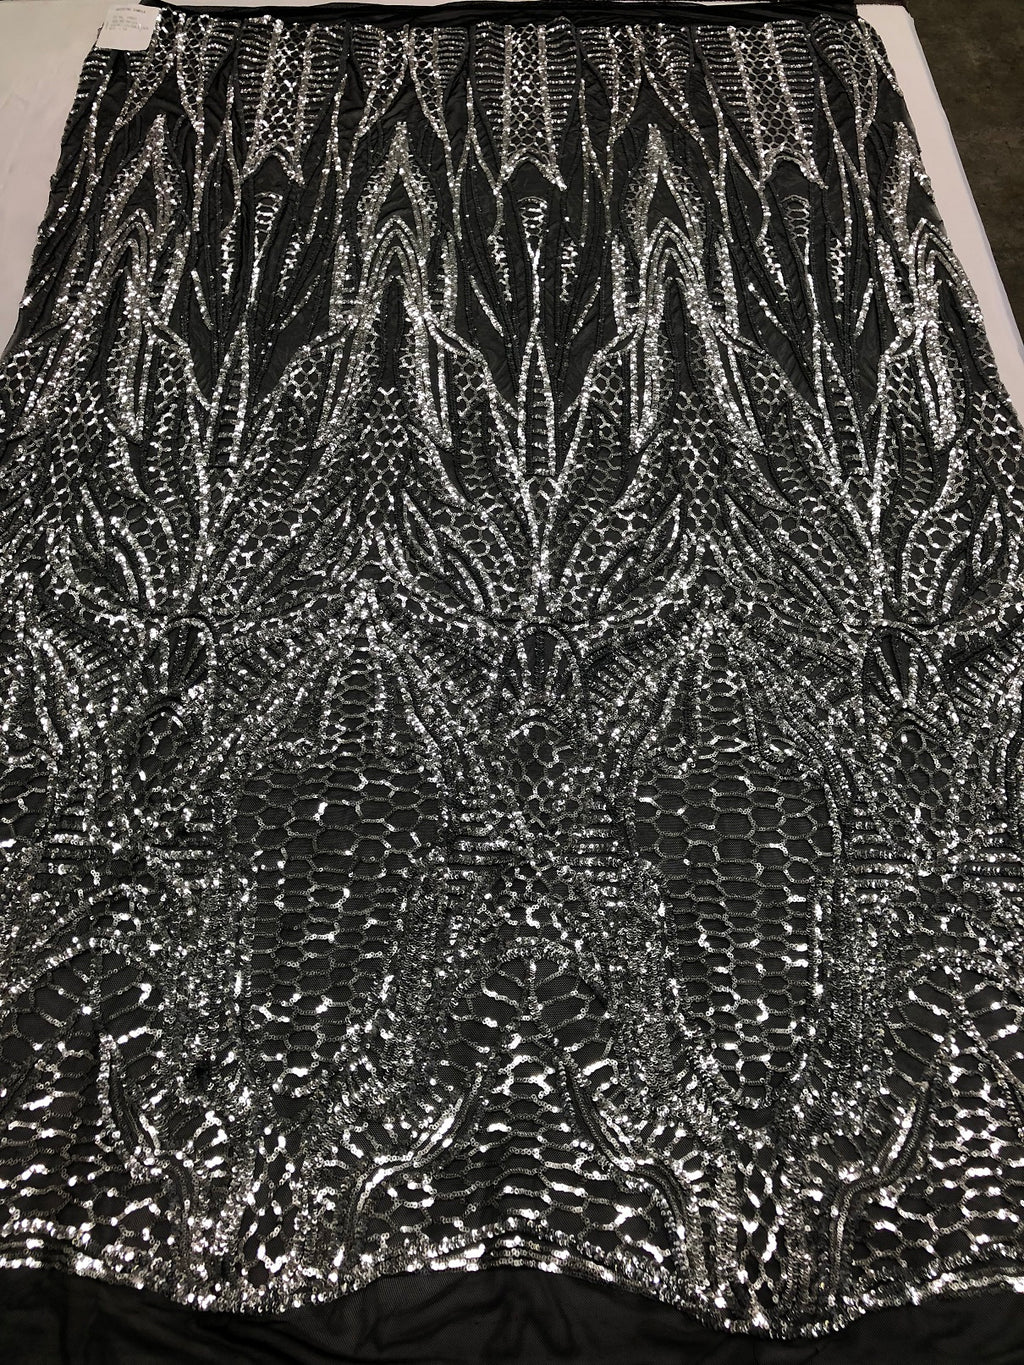 Geometric Line Sequins 4 Way Stretch Fabric Silver on Black Mesh Quali